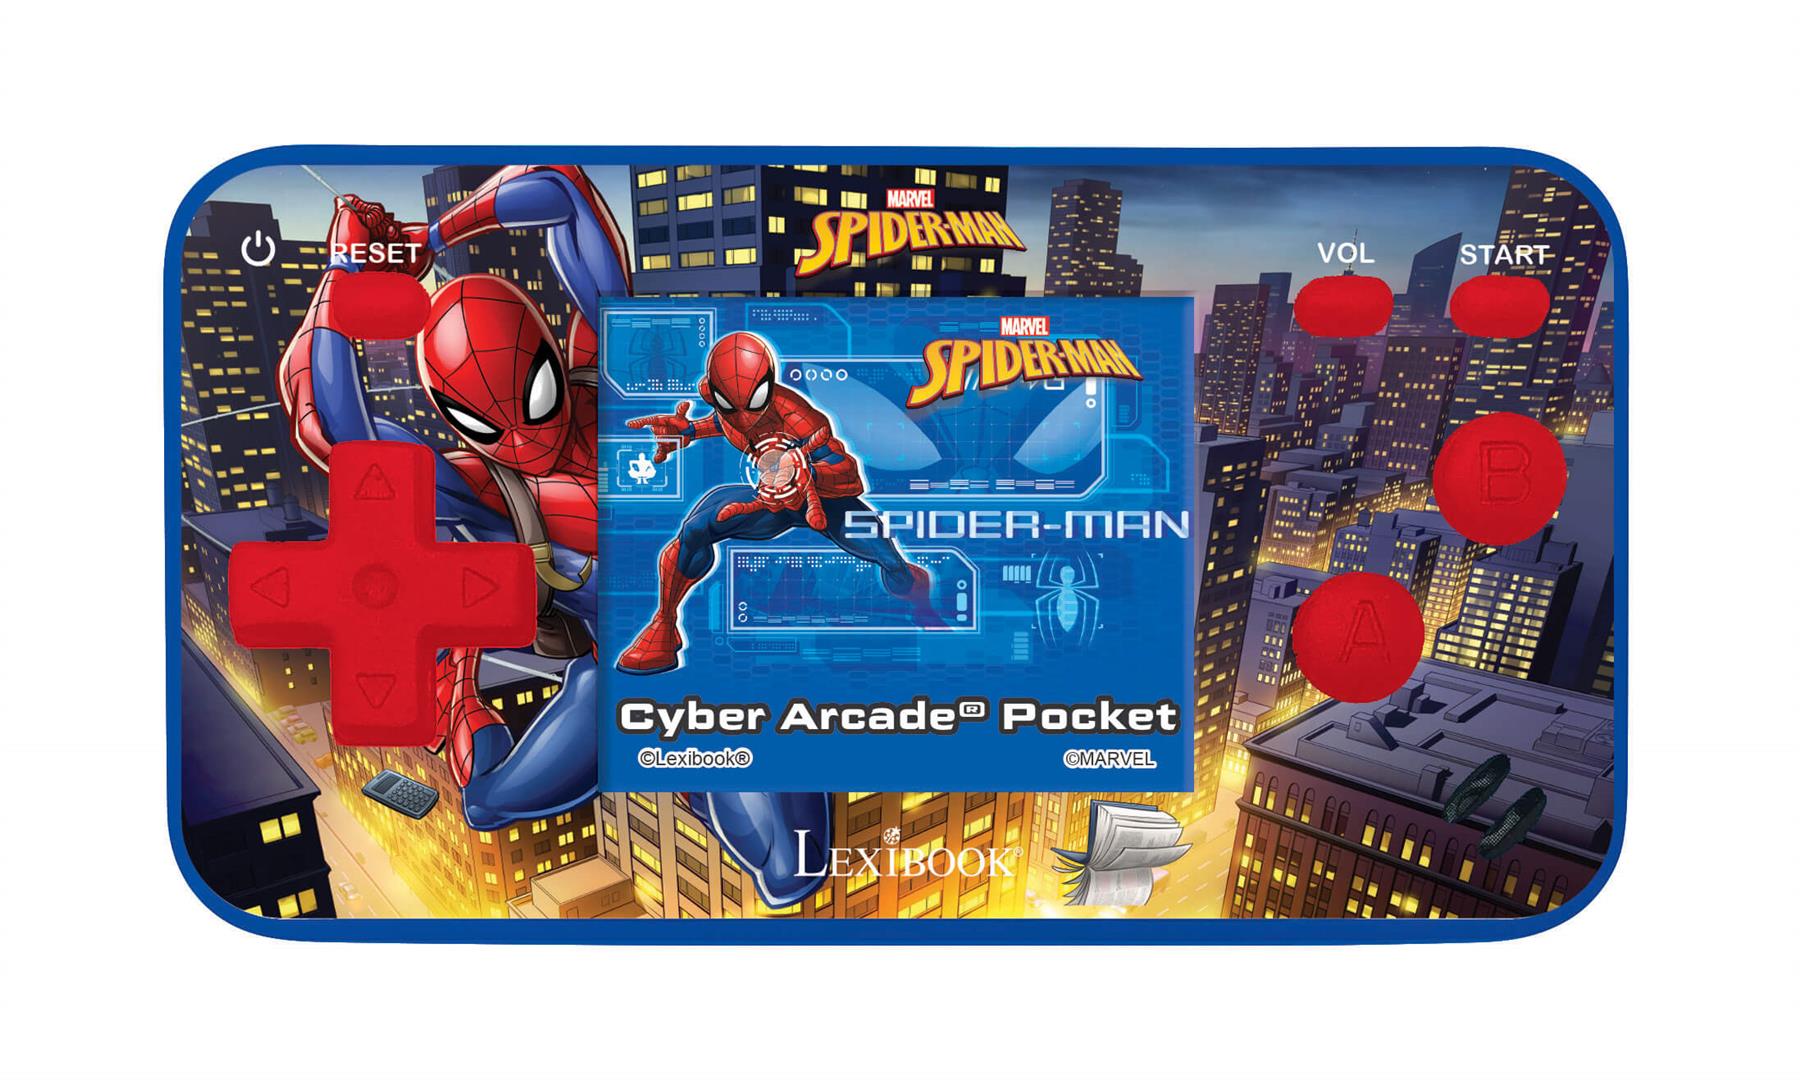 Spiderman Cyber Arcade Pocket Handheld Games Console